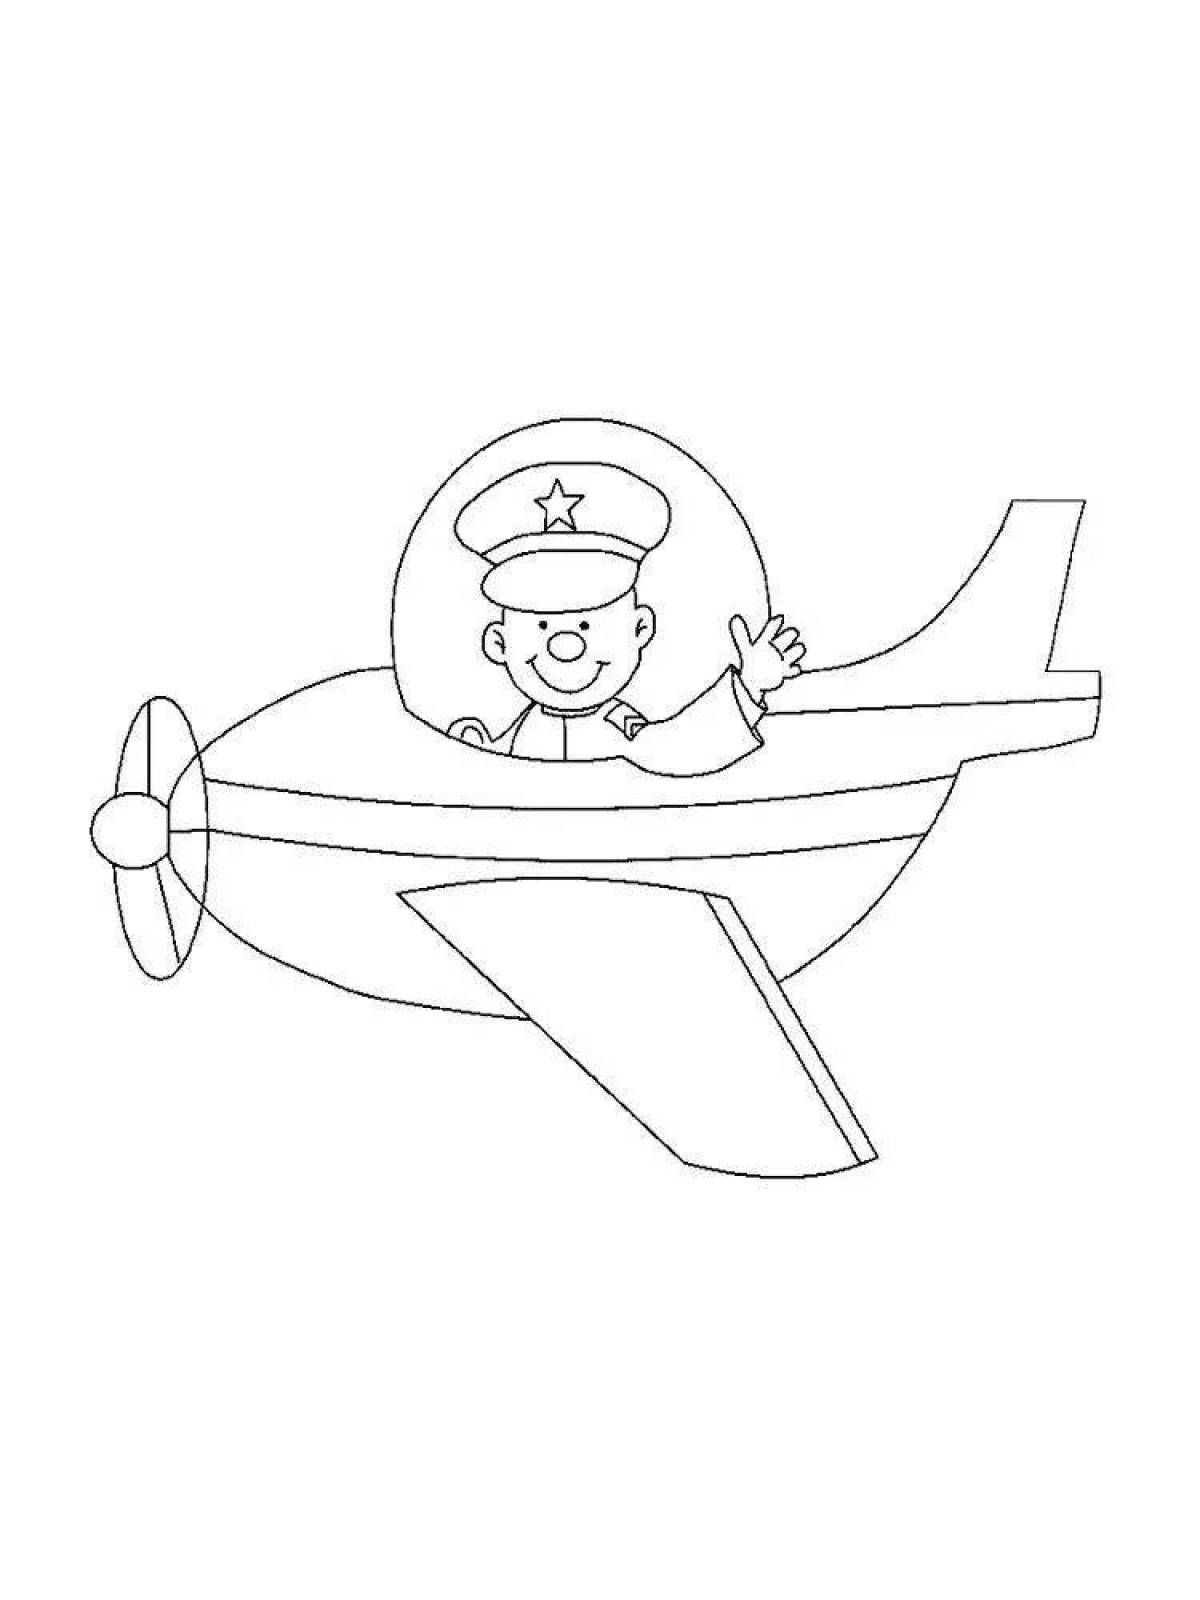 Fabulous pilot coloring pages for kids